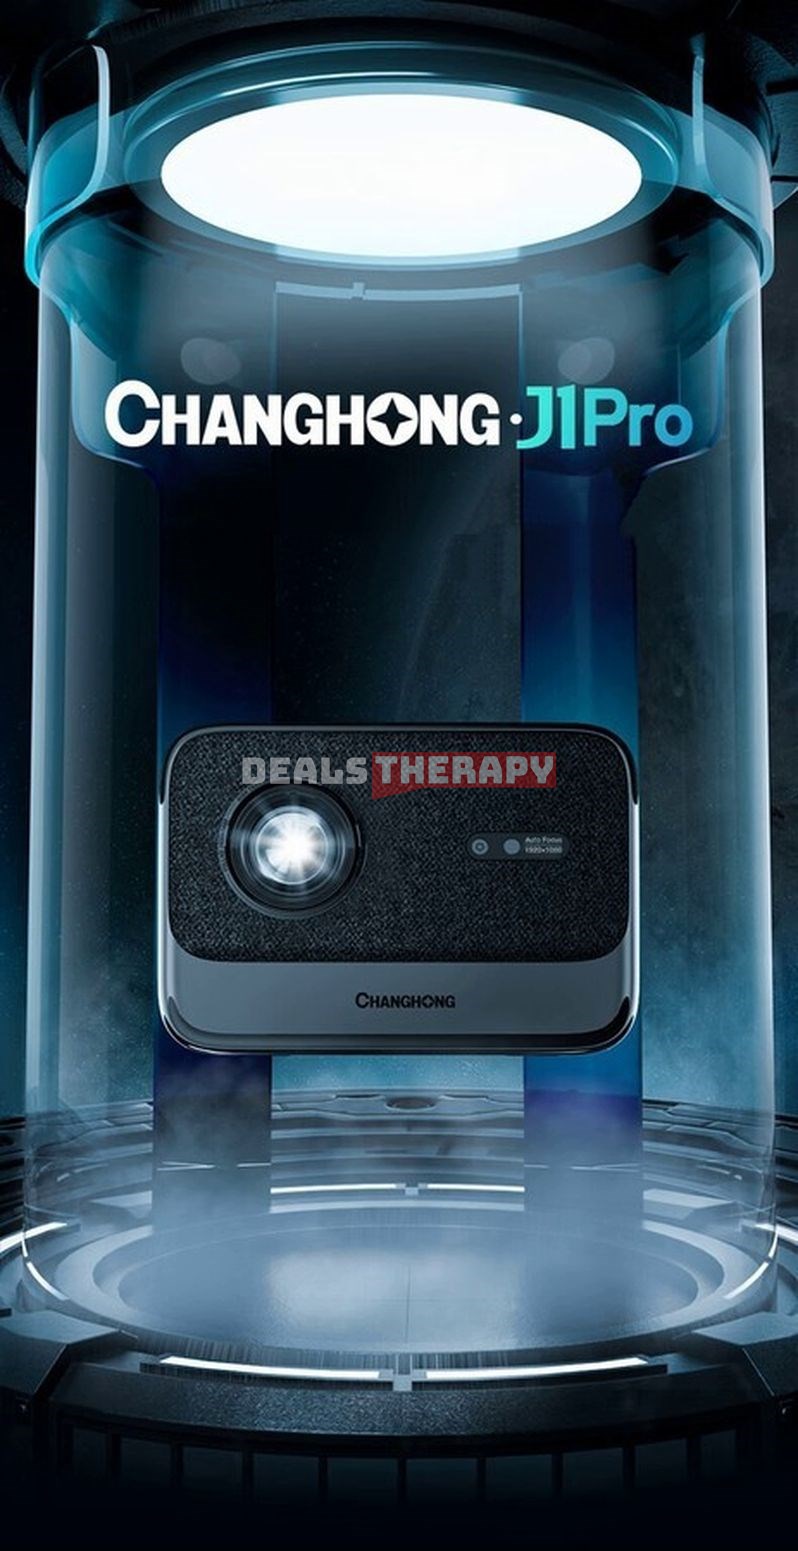 CHANGHONG J1 Pro